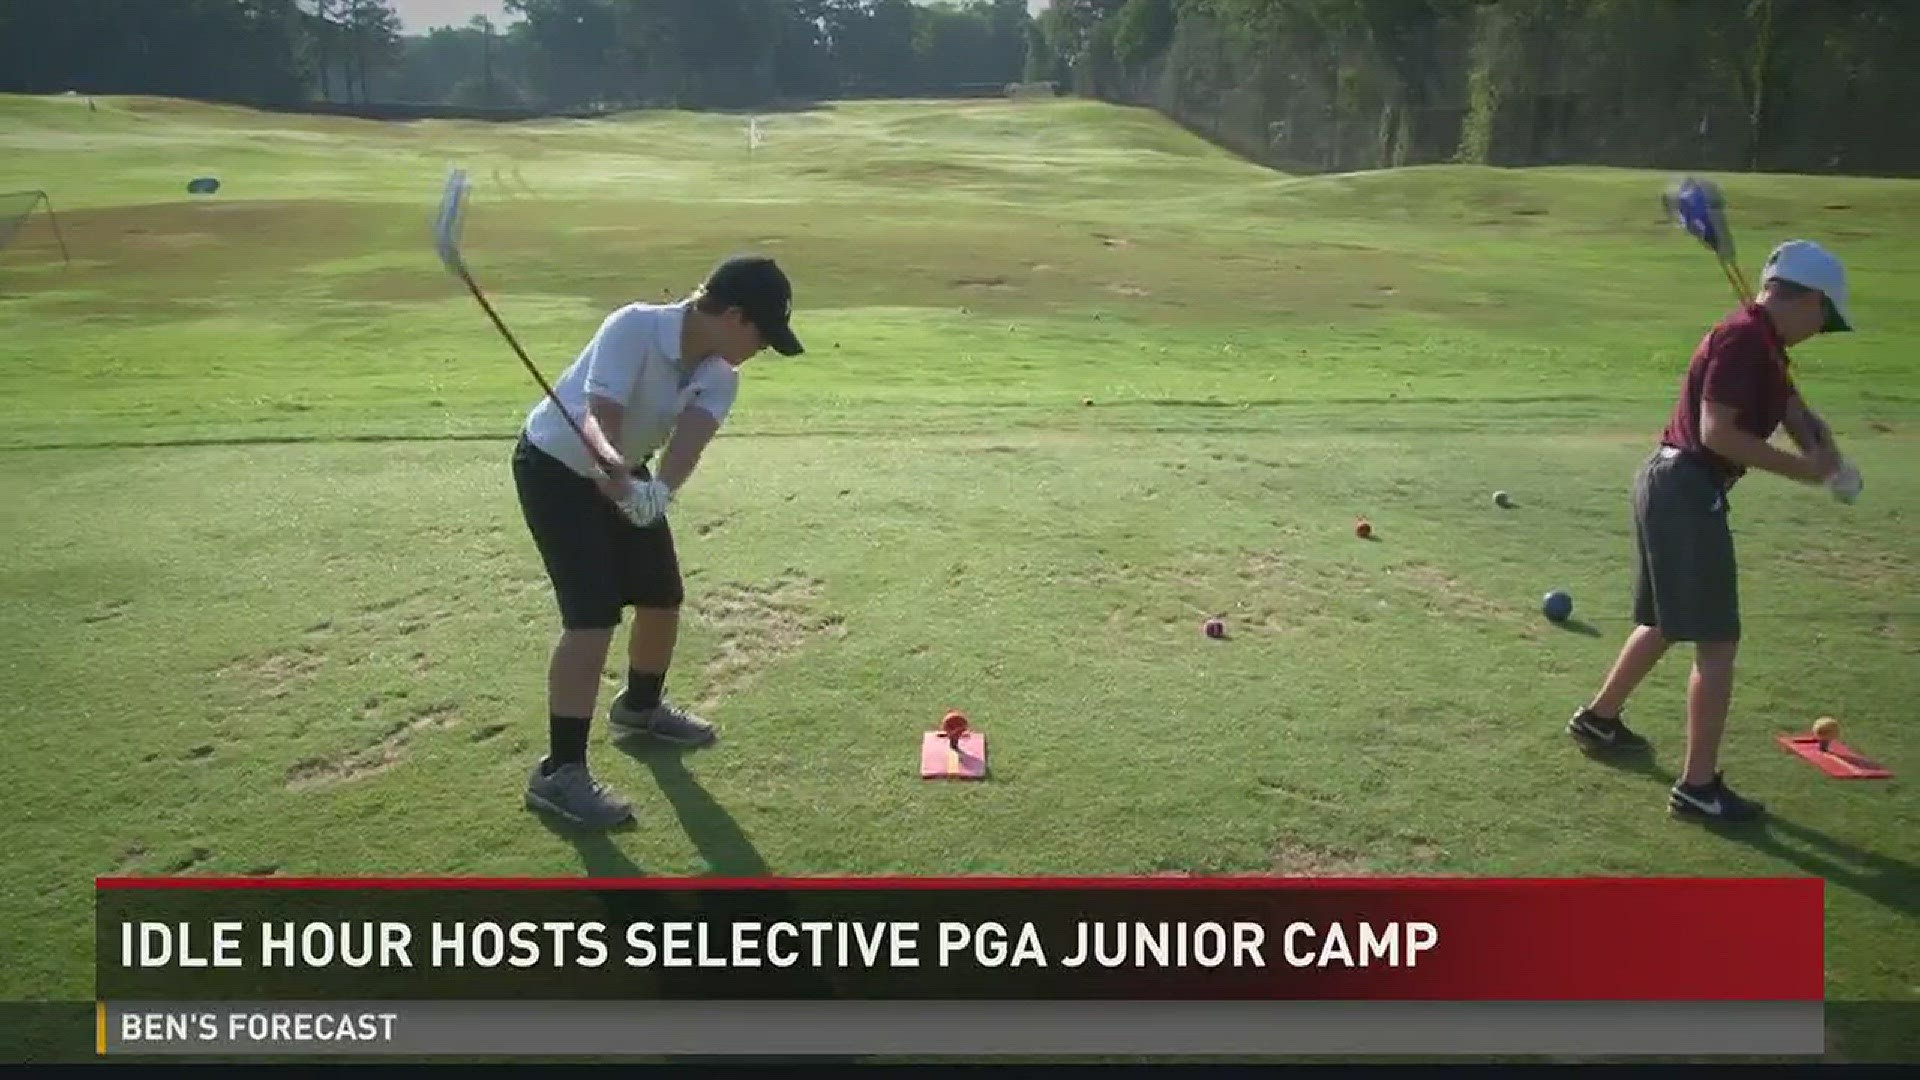 Idle Hour hosts selective PGA Junior Camp